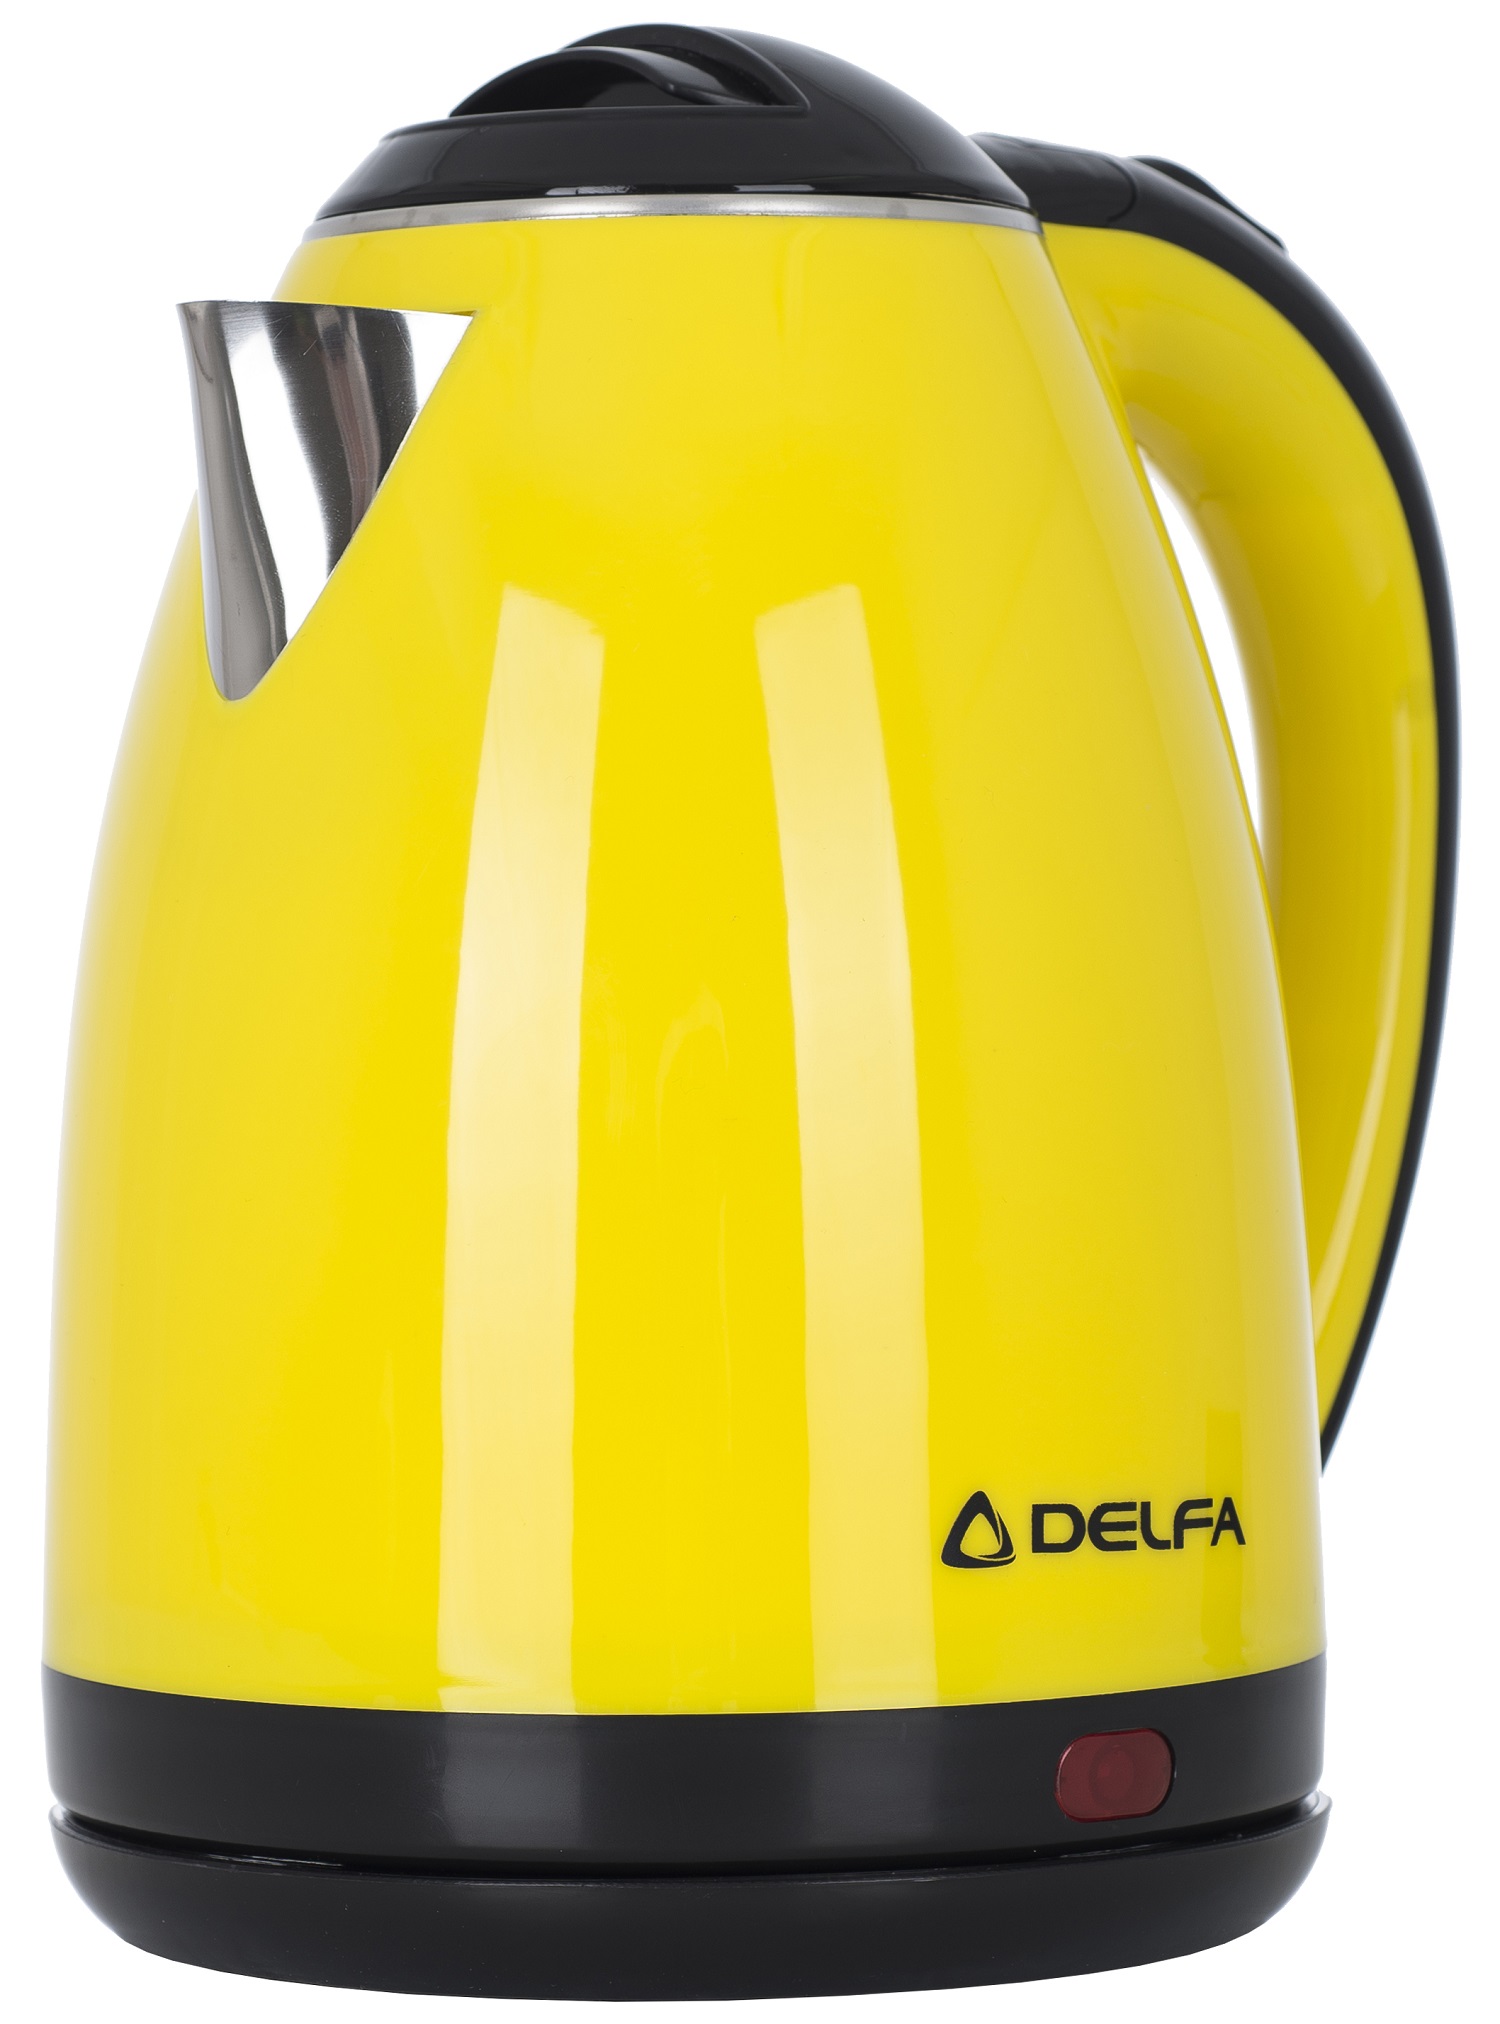 Цена электрочайник Delfa DK 3530 X Yellow в Киеве